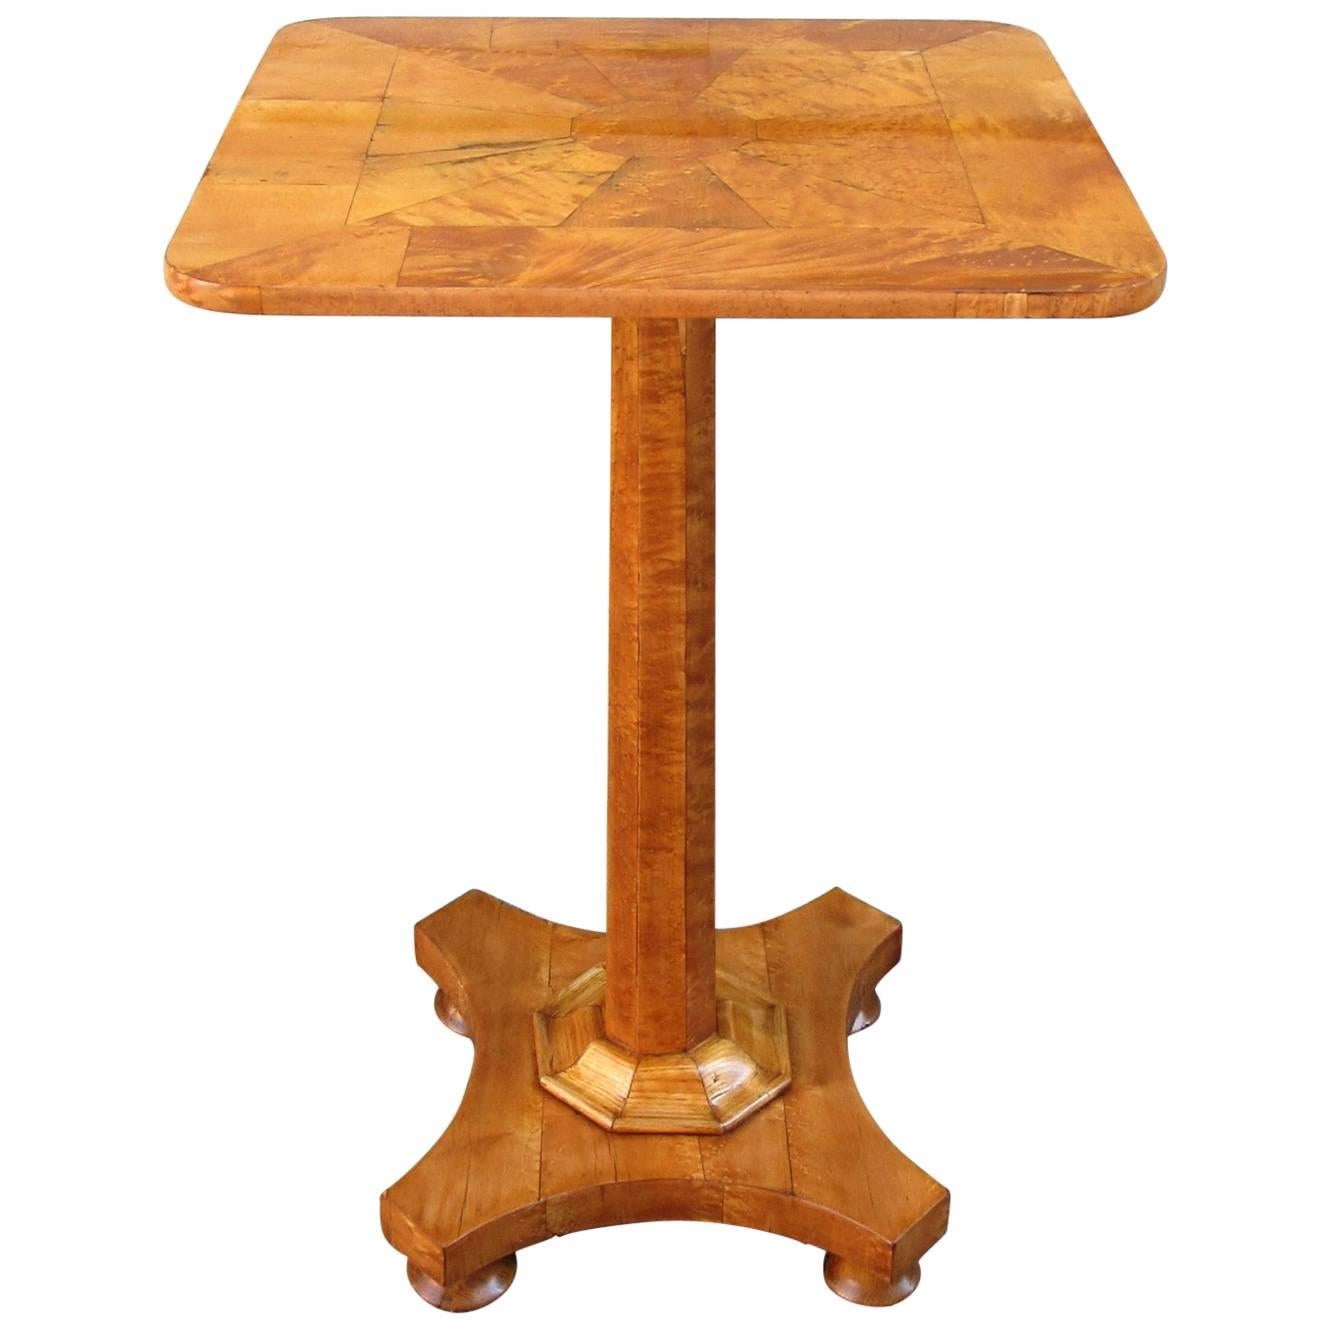 19th Century English Regency Birdseye Maple Occasional Pedestal Table